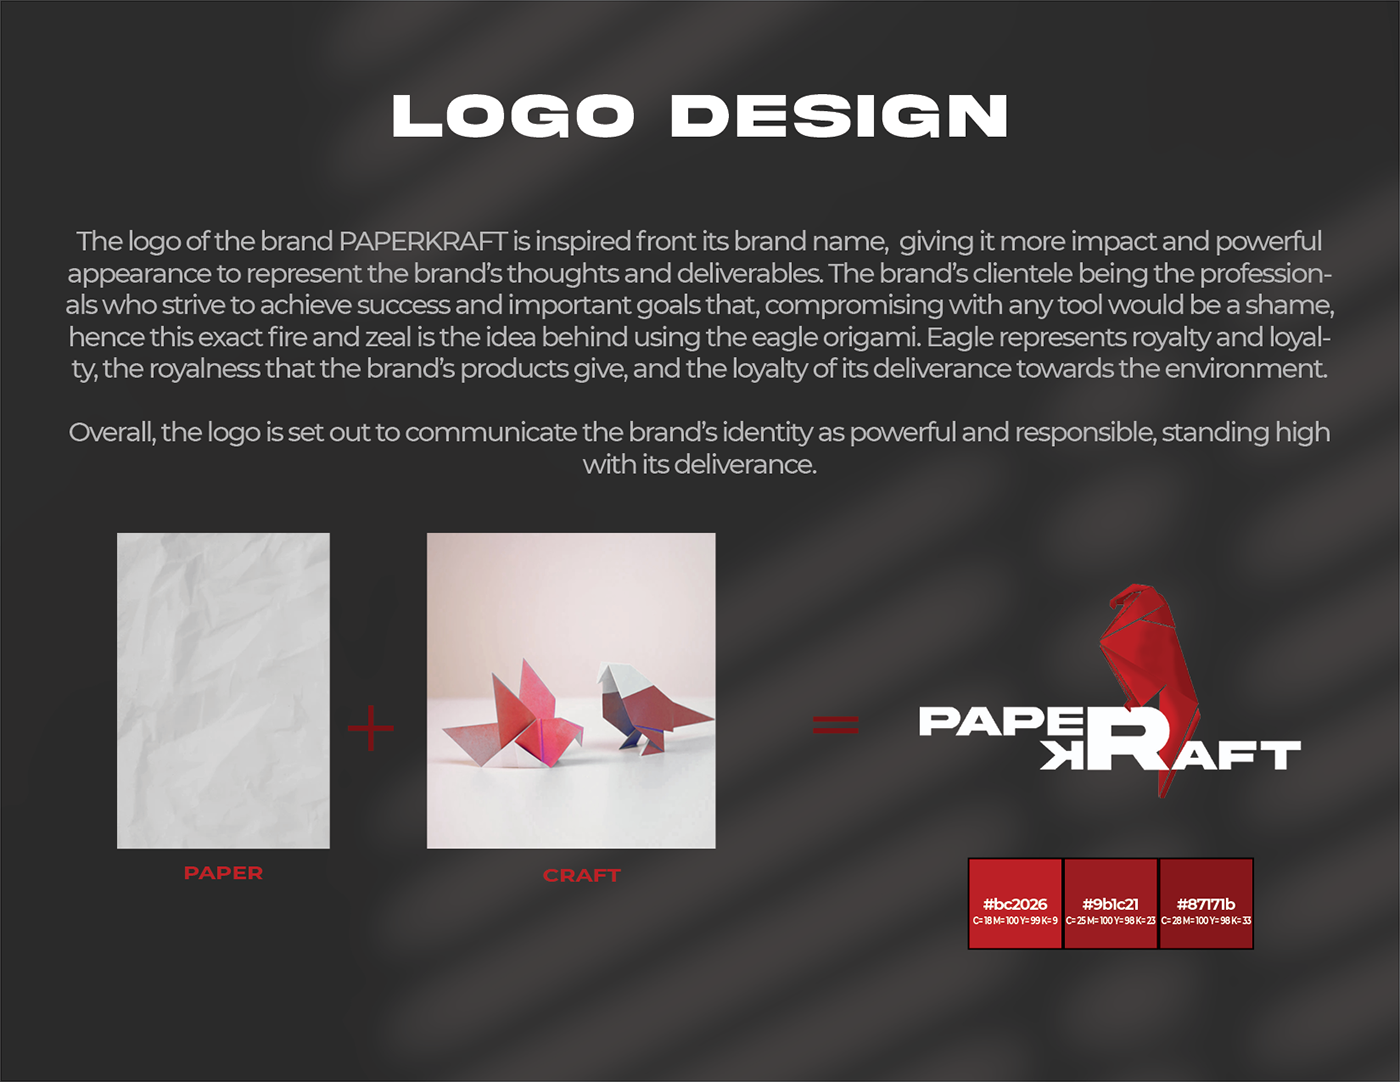 #brand #brand identity #brand'sstudy #LogoDesign #mockups #paperkraft #website